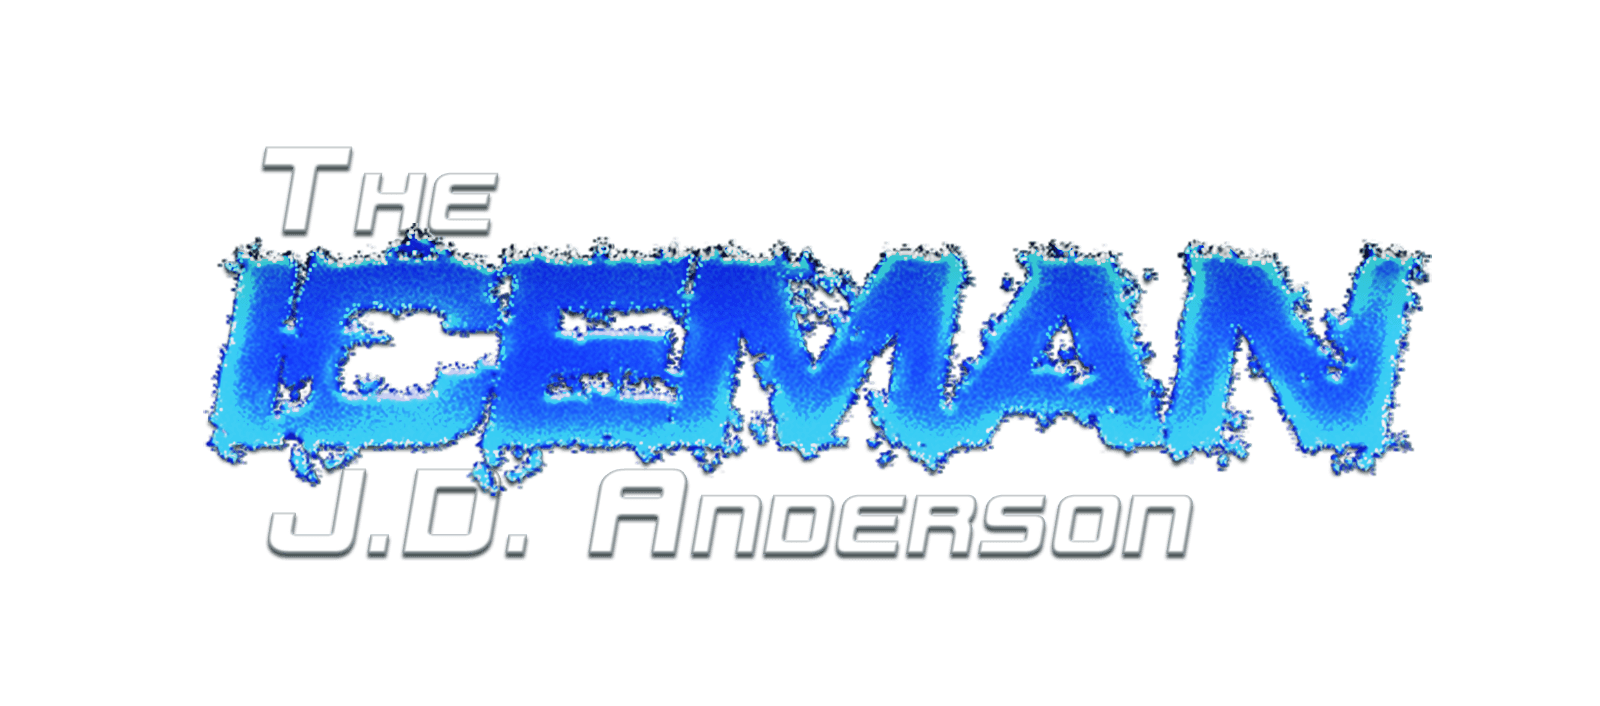 Iceman Logo - IceMan Logo No BG - JD ICEMAN